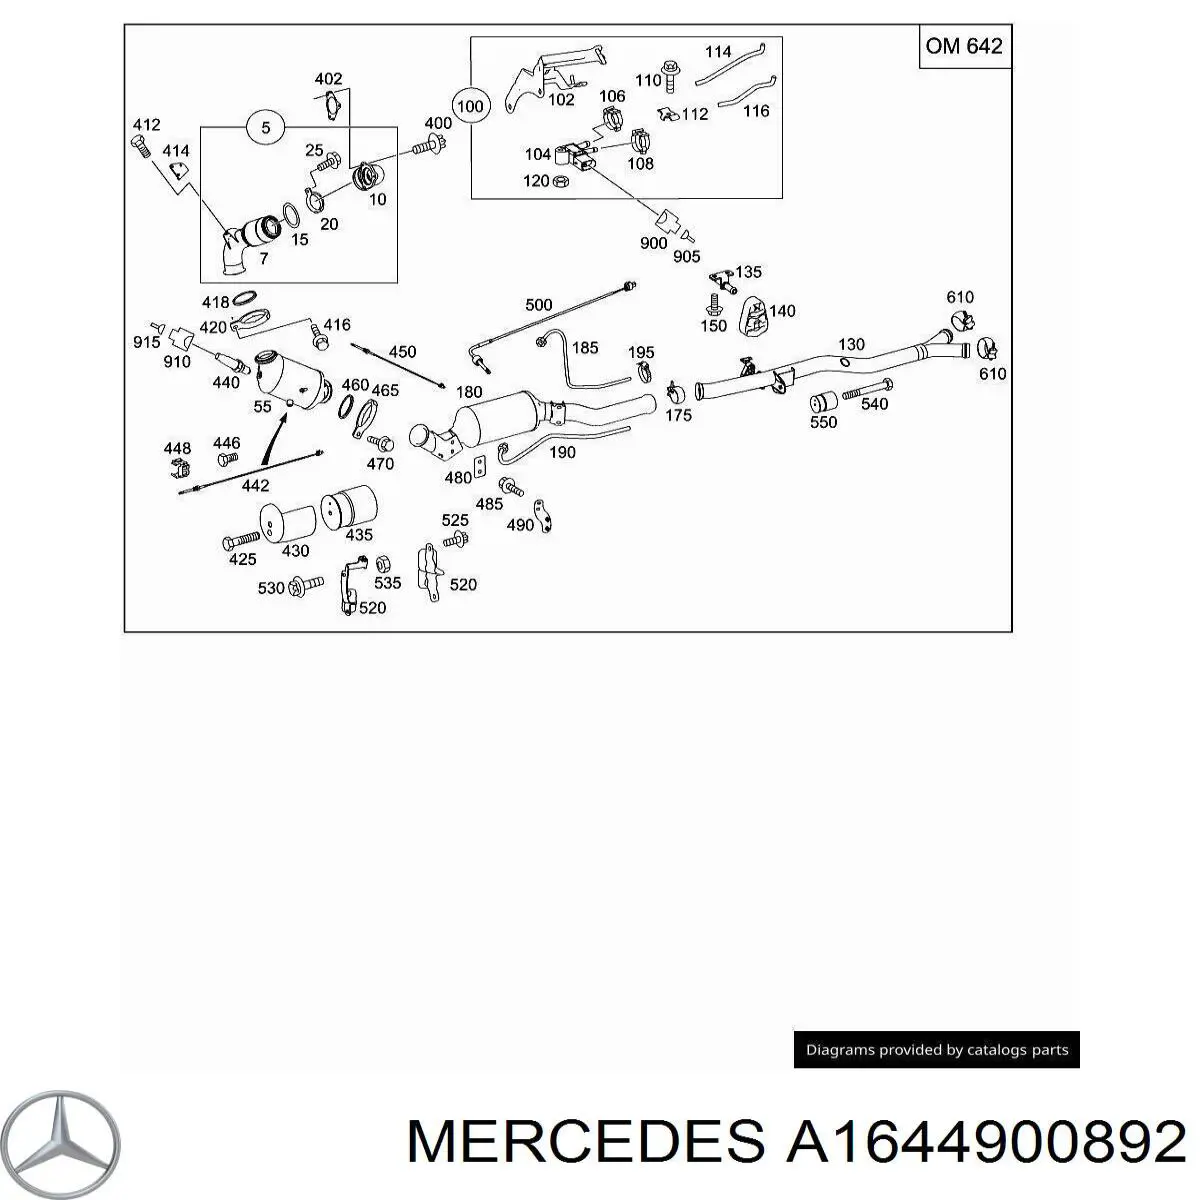 A1644900892 Mercedes